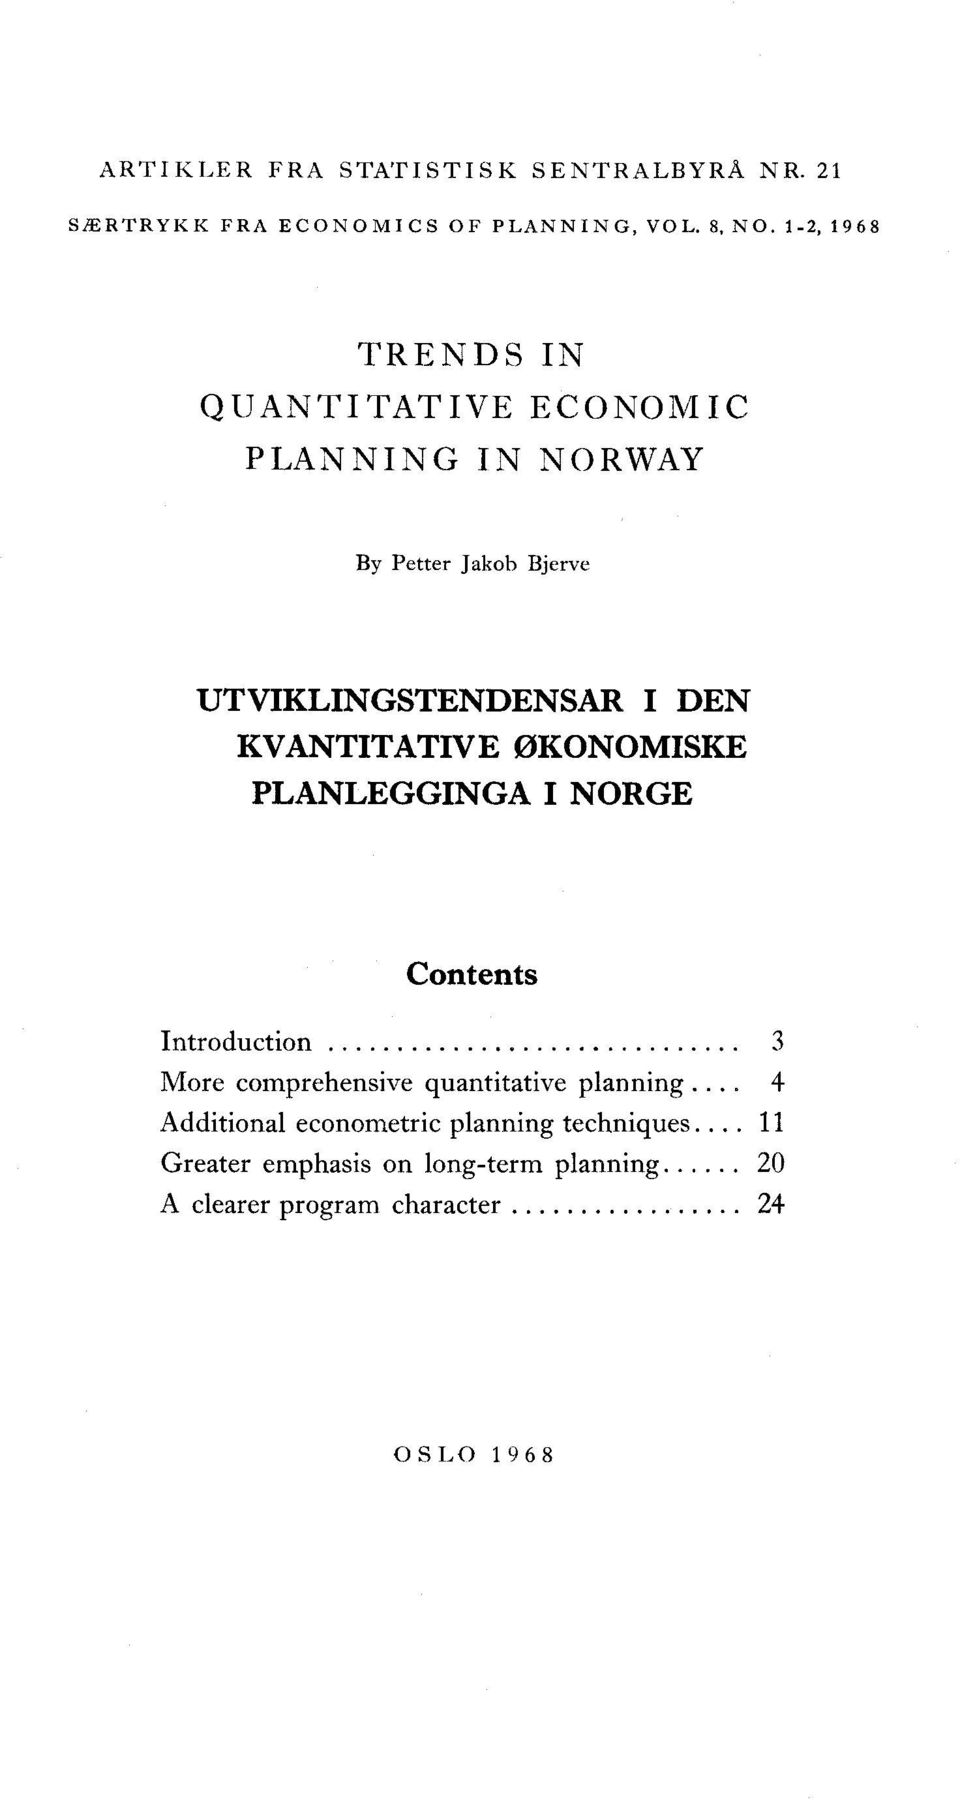 KVANTITATIVE ØKONOMISKE PLANLEGGINGA I NORGE Contents Introduction 3 More comprehensive quantitative planning.